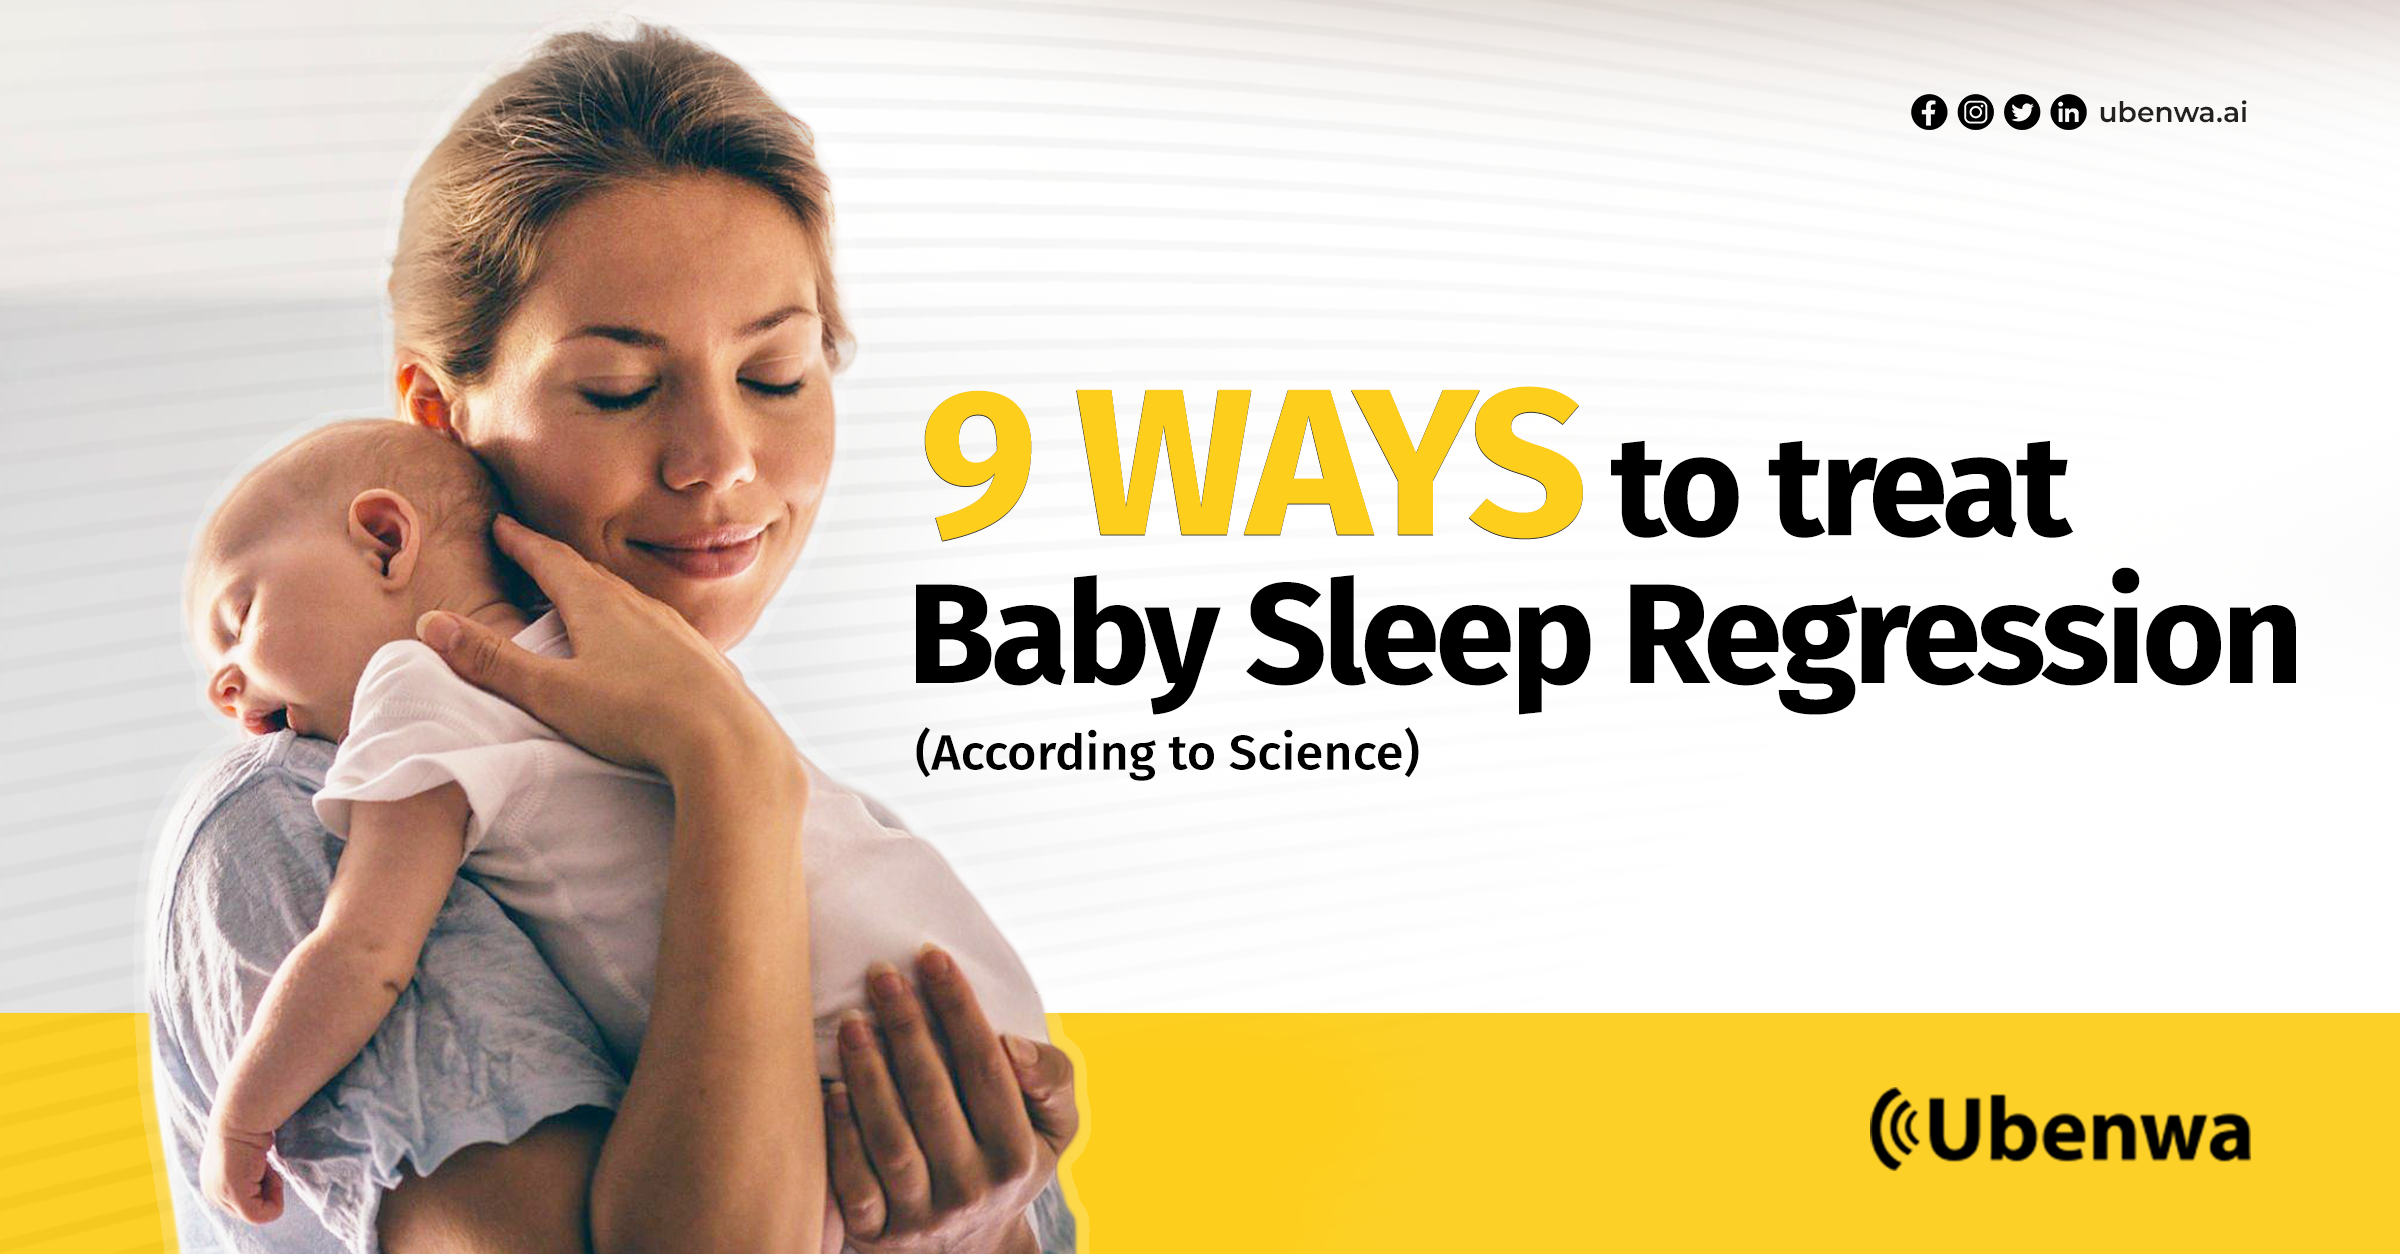 9 ways to treat baby sleep regression according to science